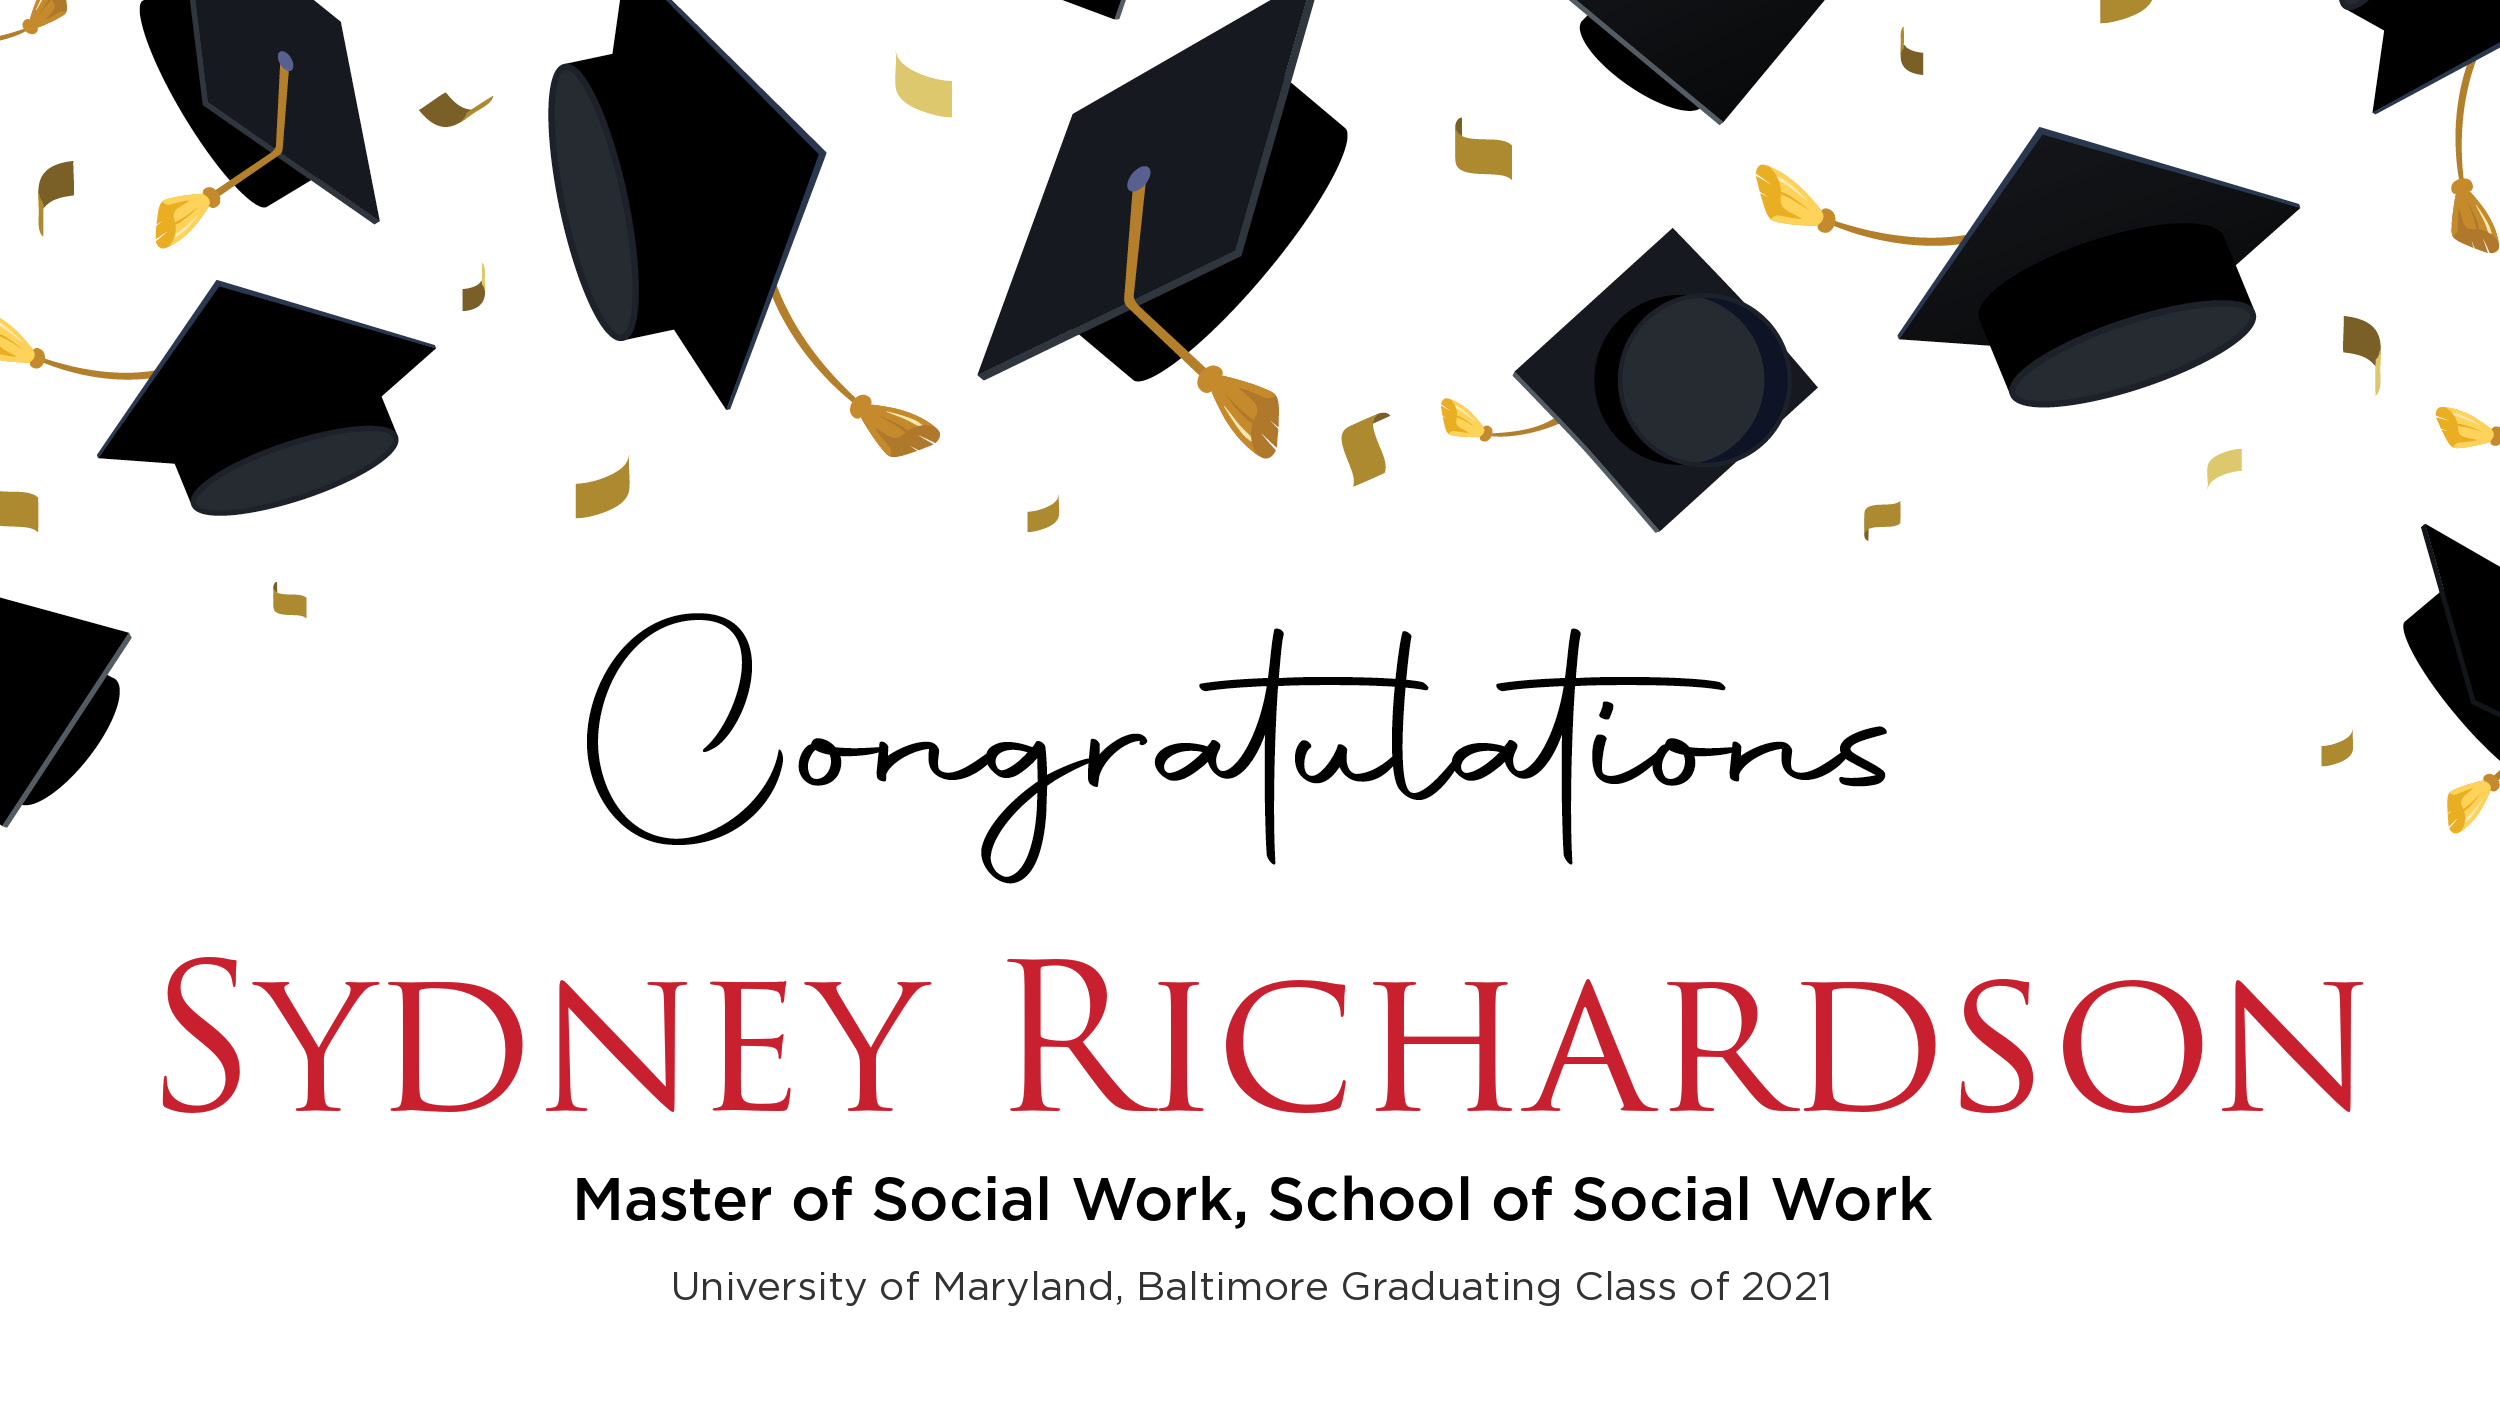 Congratulations Sydney Richardson, Master of Social Work